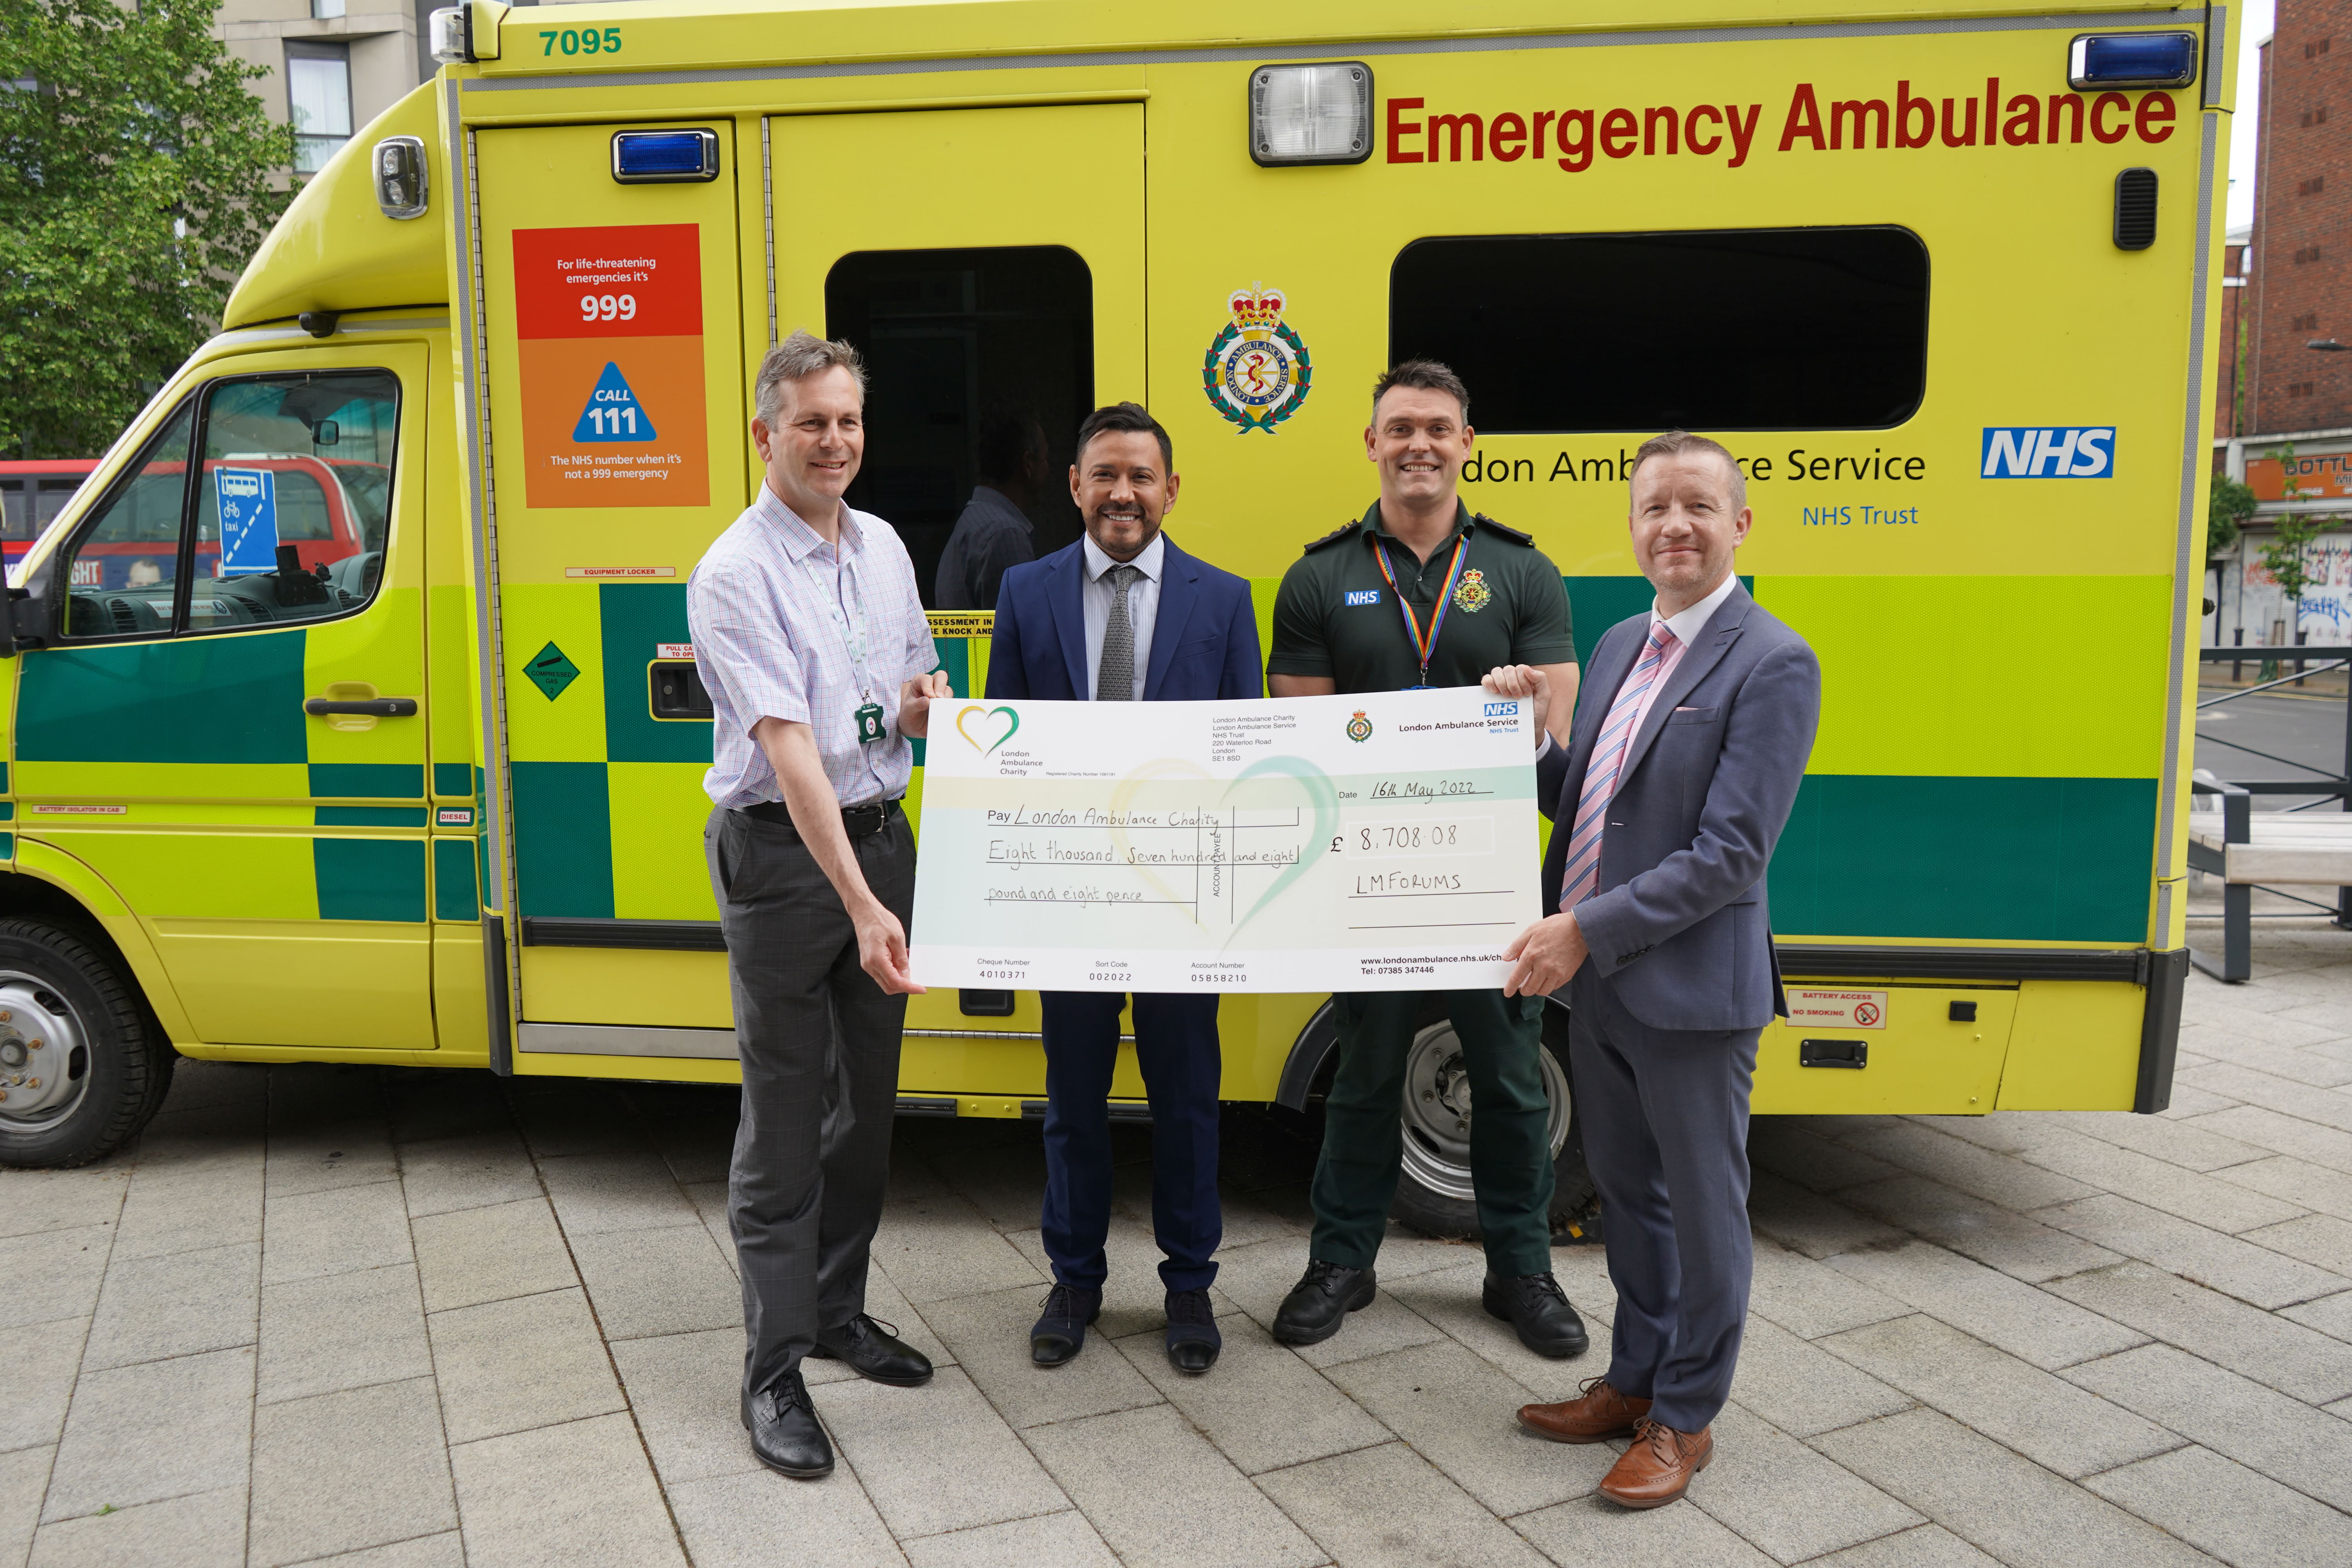 LMF - London Ambulance Service NHS Trust